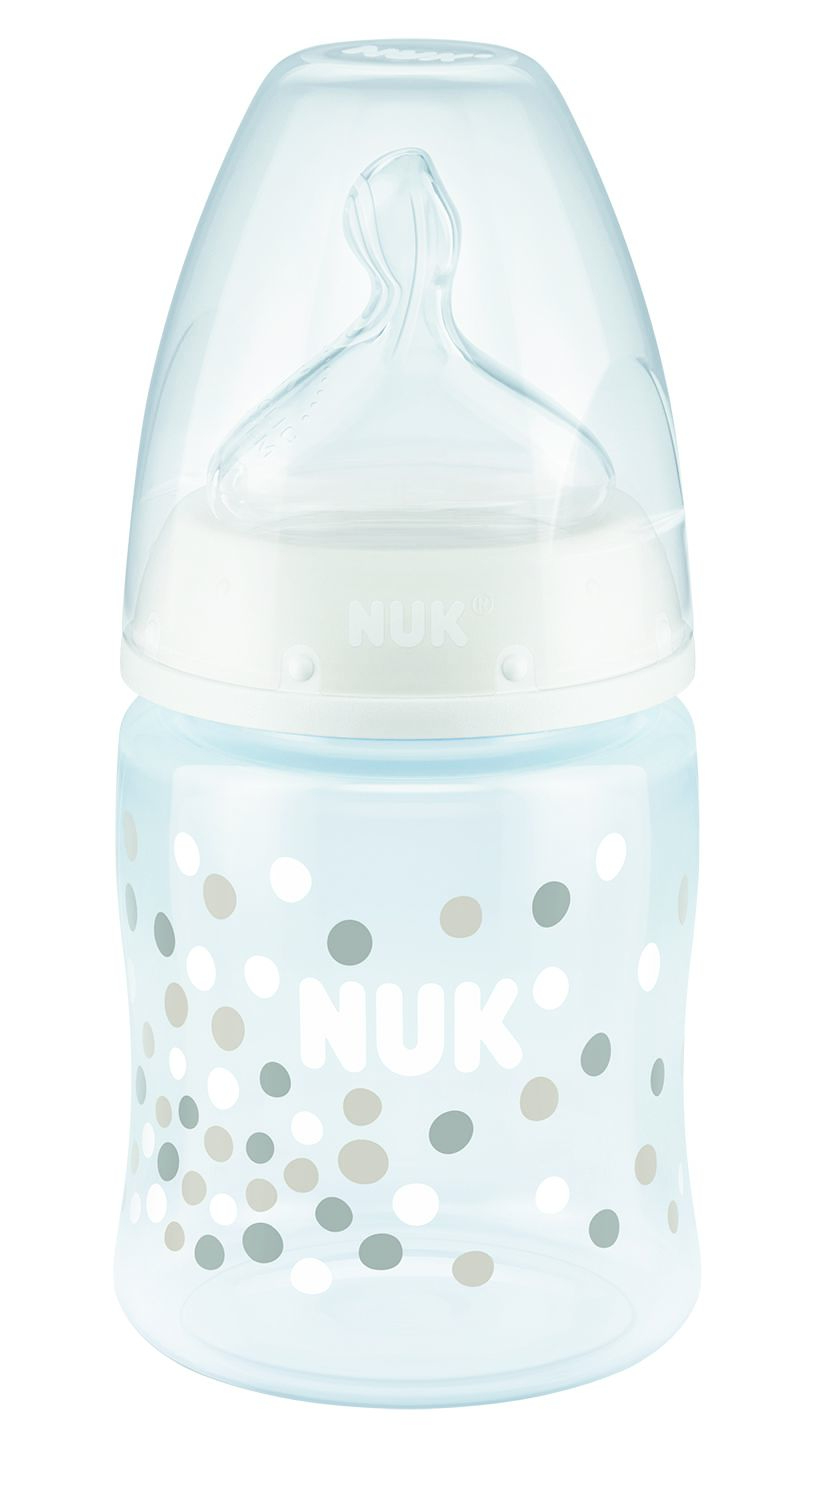 NUK® Smooth Flow Bottle Newborn Gift Set Product Image 2 of 10